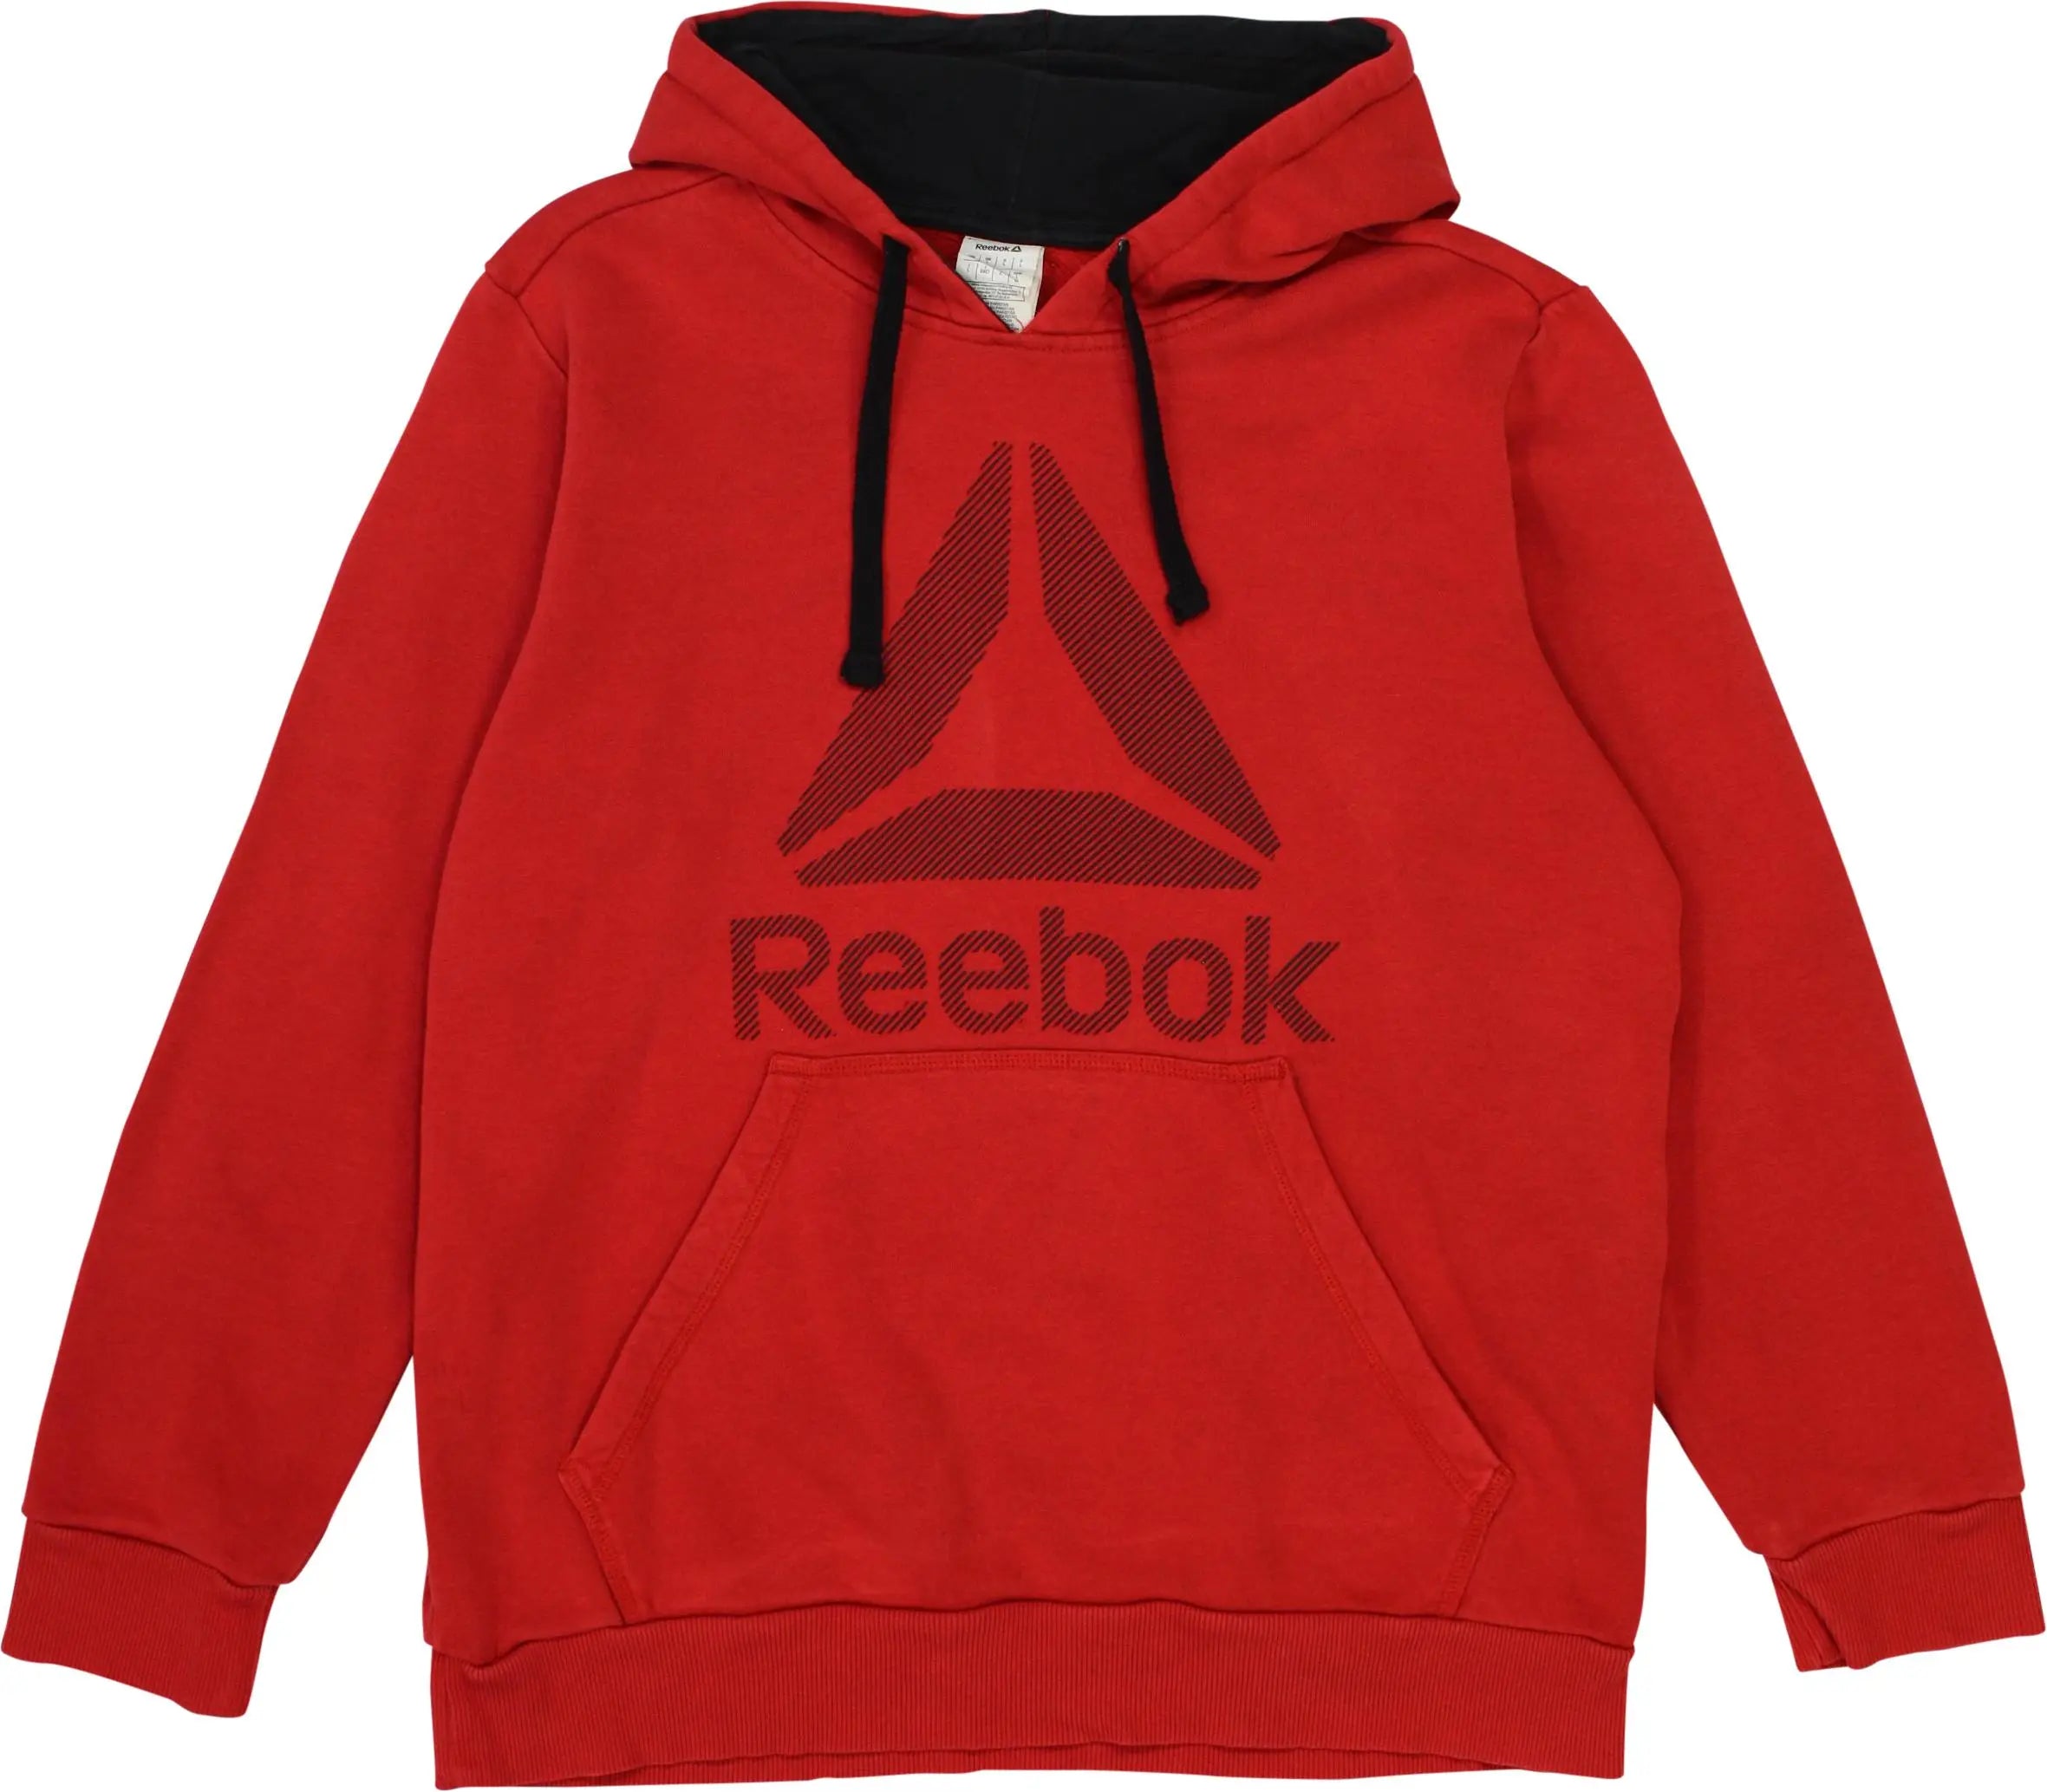 Reebok - Reebok Hoodie- ThriftTale.com - Vintage and second handclothing